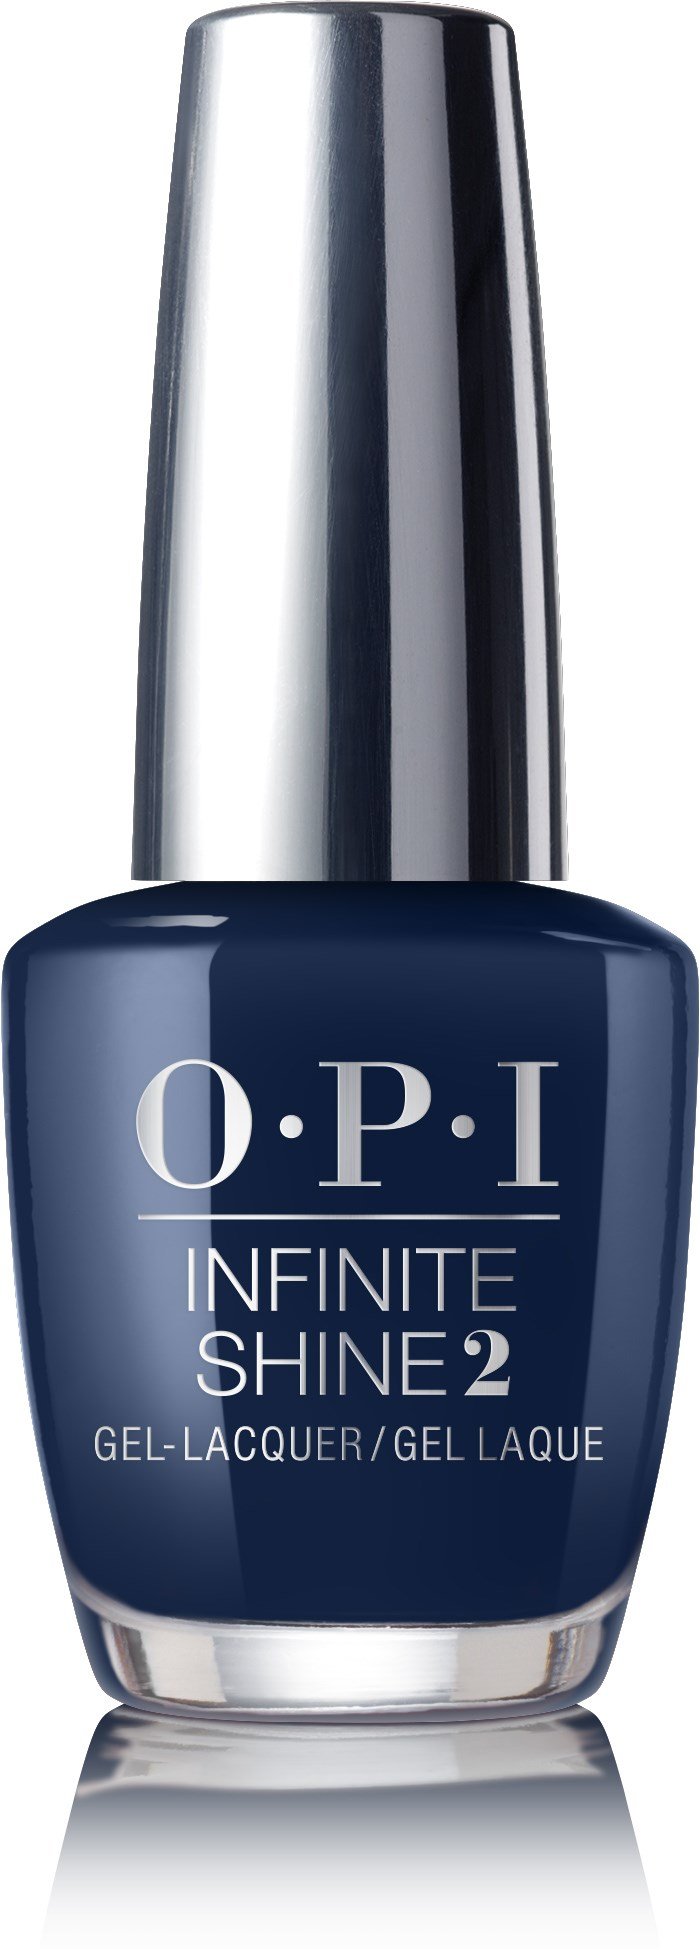 OPI Infinite Shine - Russian Navy